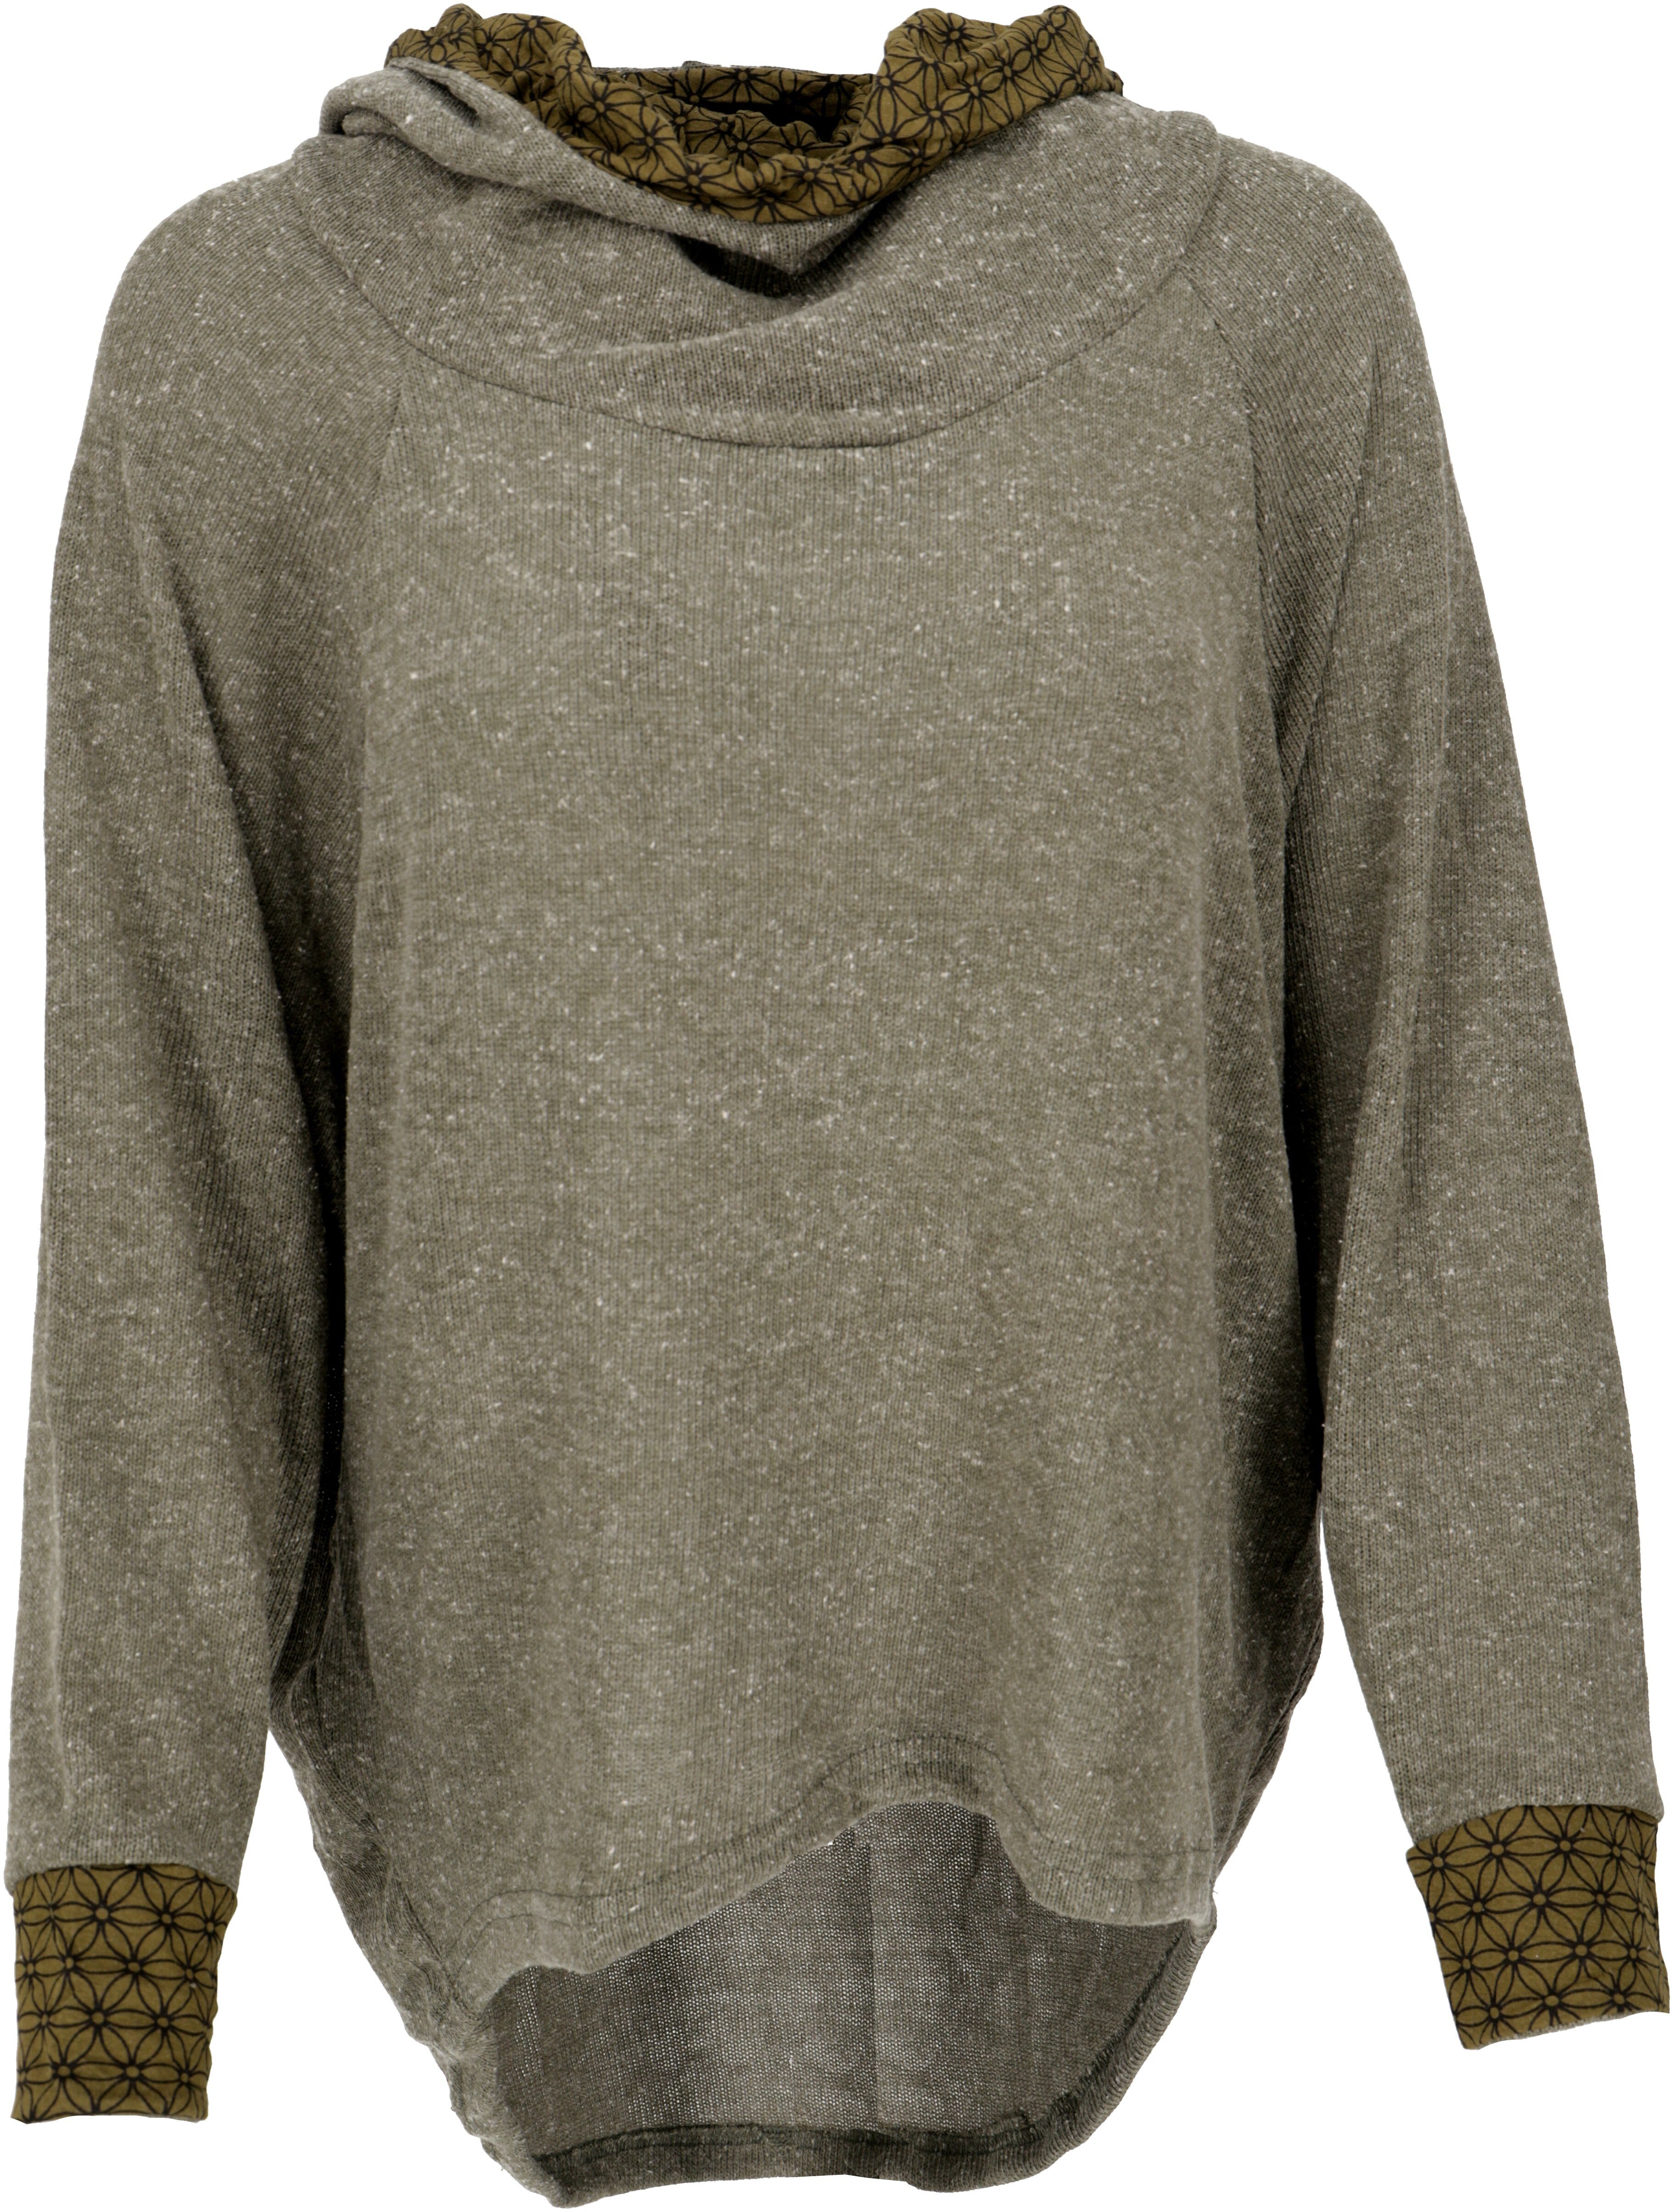 größter Versandhandel für Mode Guru-Shop Longsleeve Hoody, alternative Kapuzenpullover Sweatshirt, Bekleidung Pullover, khakigrün 